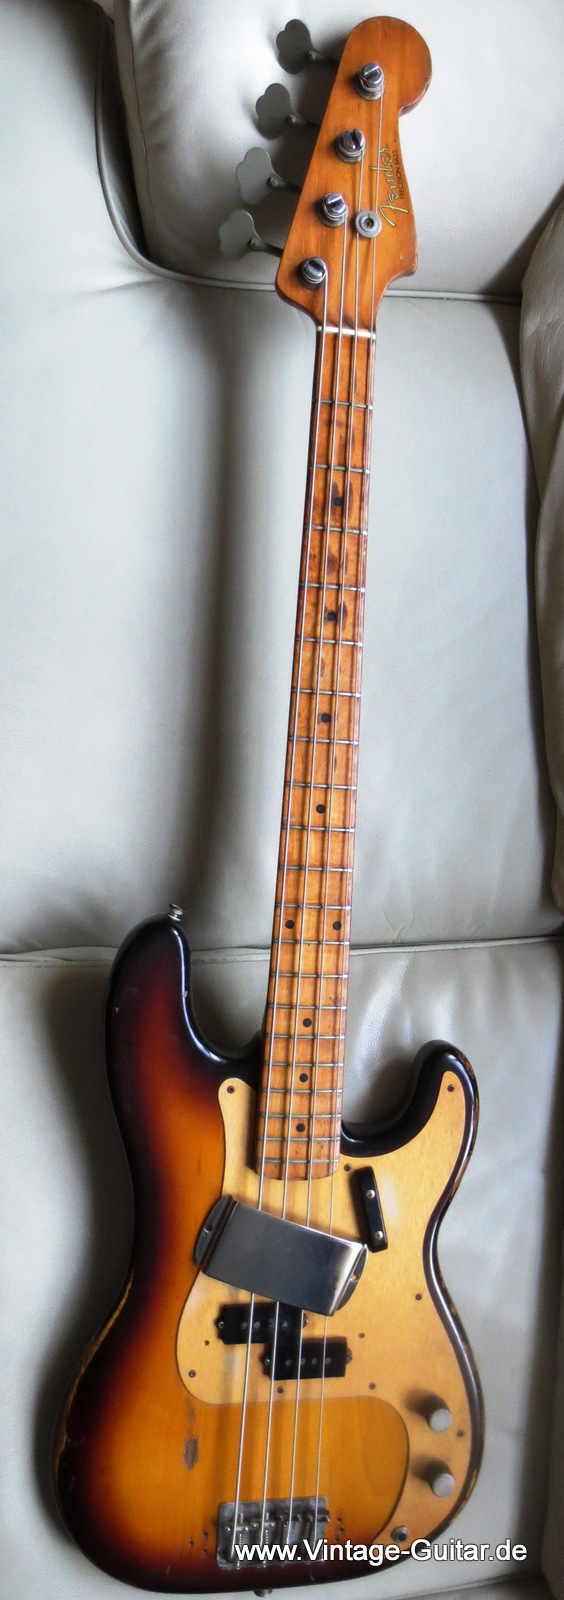 Fender_Precision_Bass_1958-anodized-pickguard-001.JPG